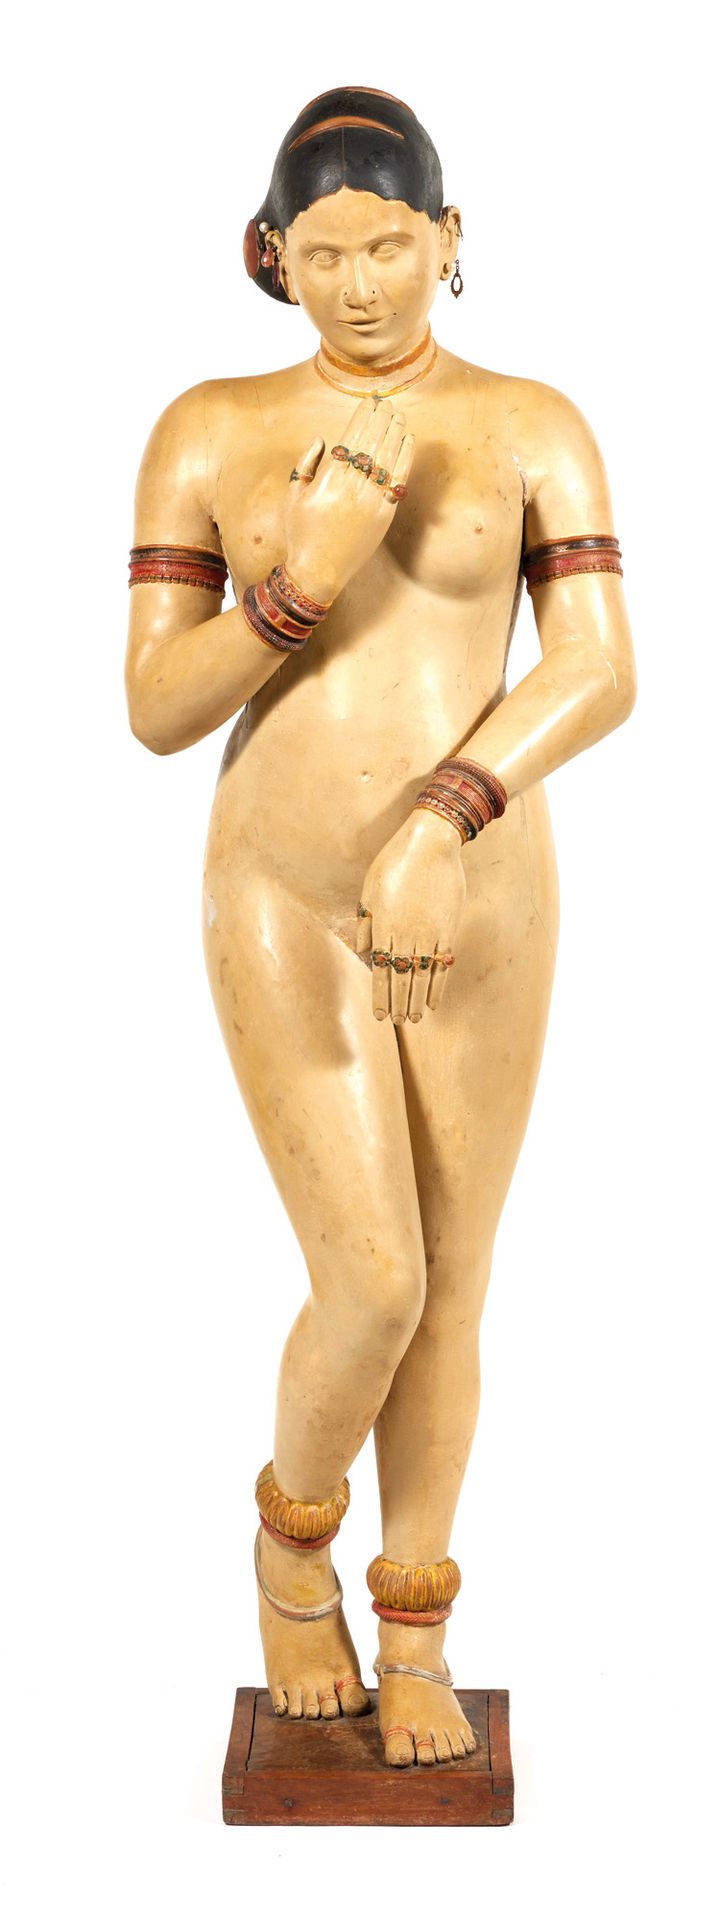 Vénus pudique Pudique Venus

Escultura de madera estucada y policromada sobre un&hellip;